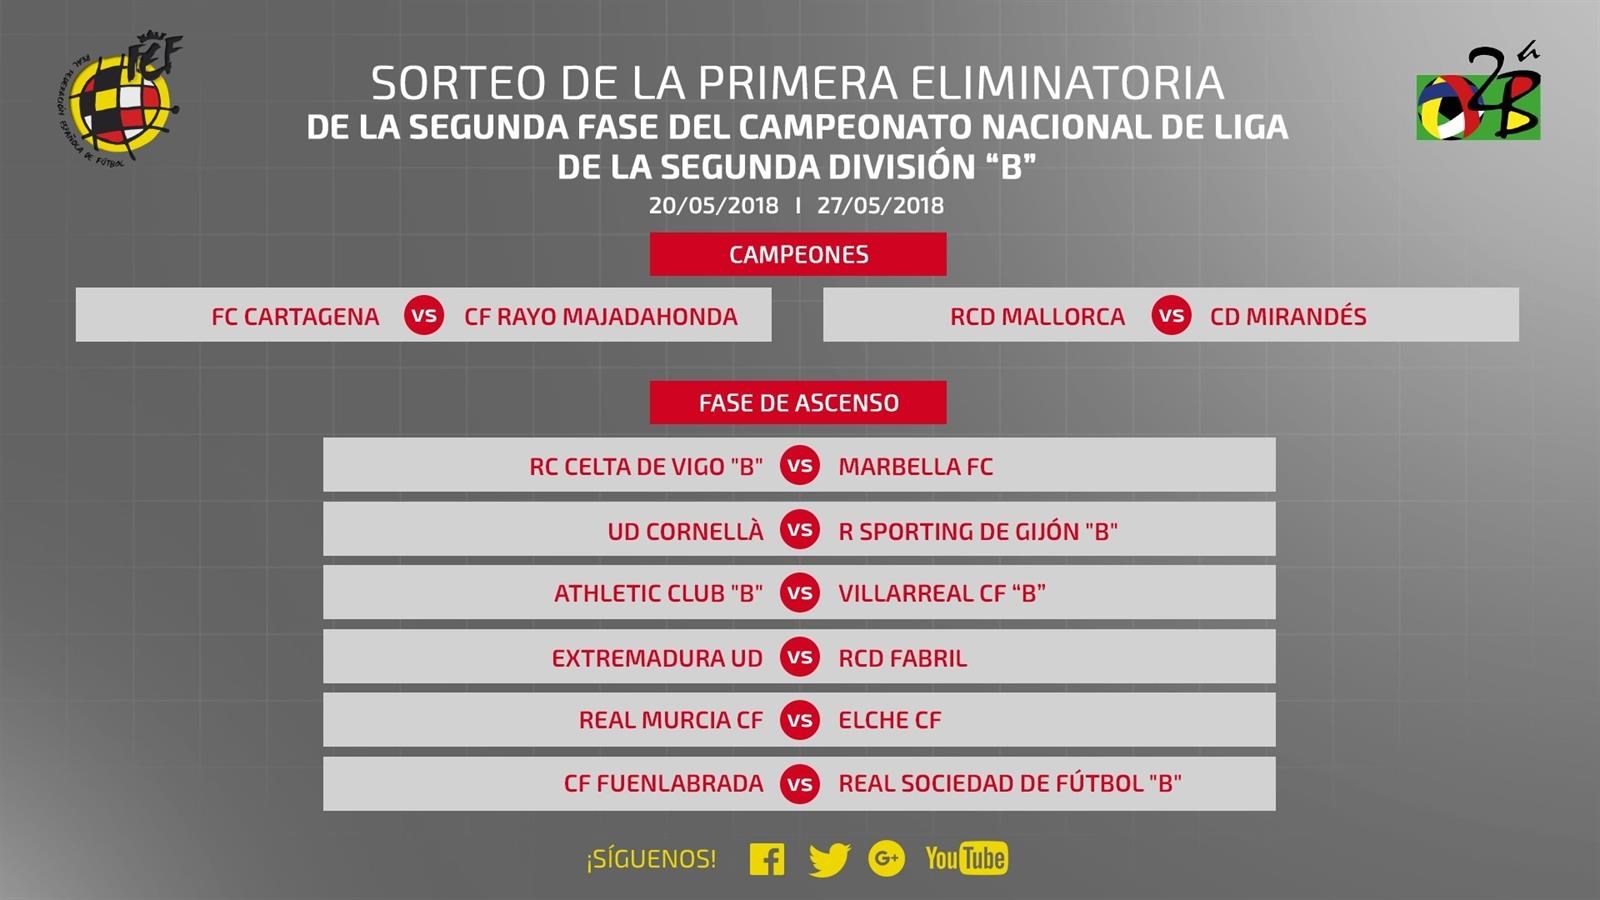 y Mallorca-Mirandés, cruces de los 'campeones' en la fase de ascenso la Liga 123 - Republica.com